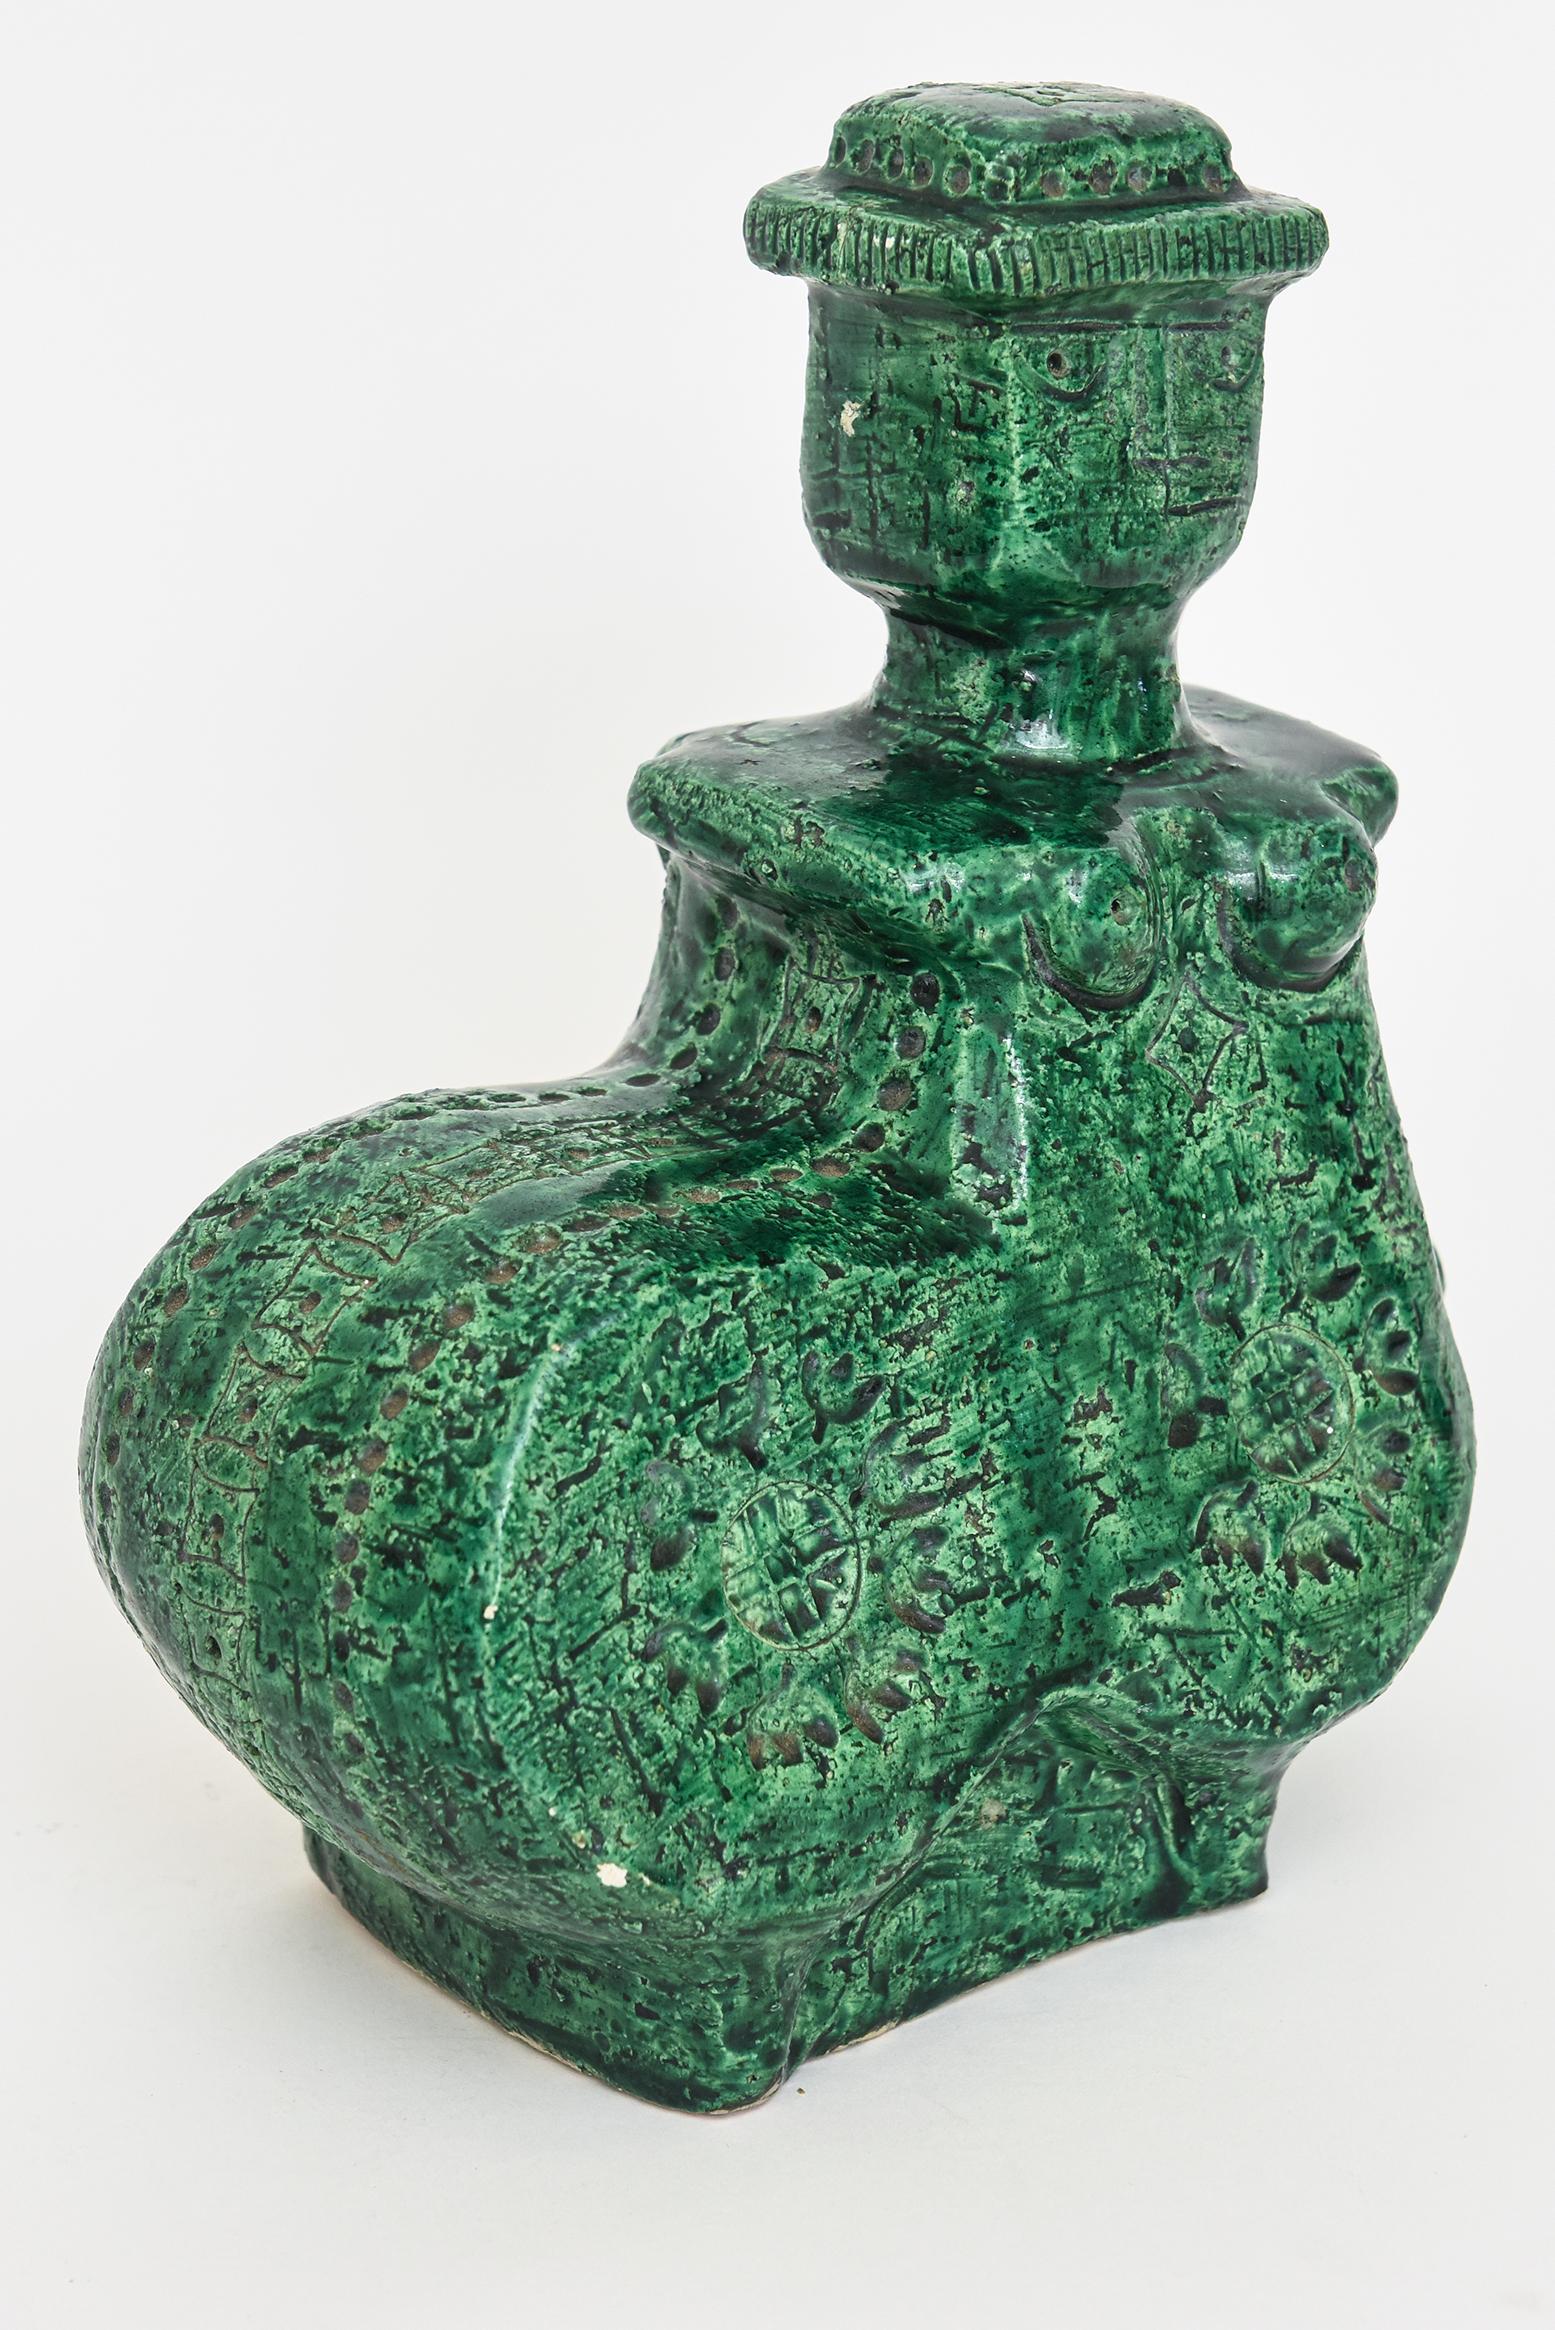 Aldo Londi for Bitossi Green Glazed Textural Hallmarked Ceramic Italian Vintage For Sale 1